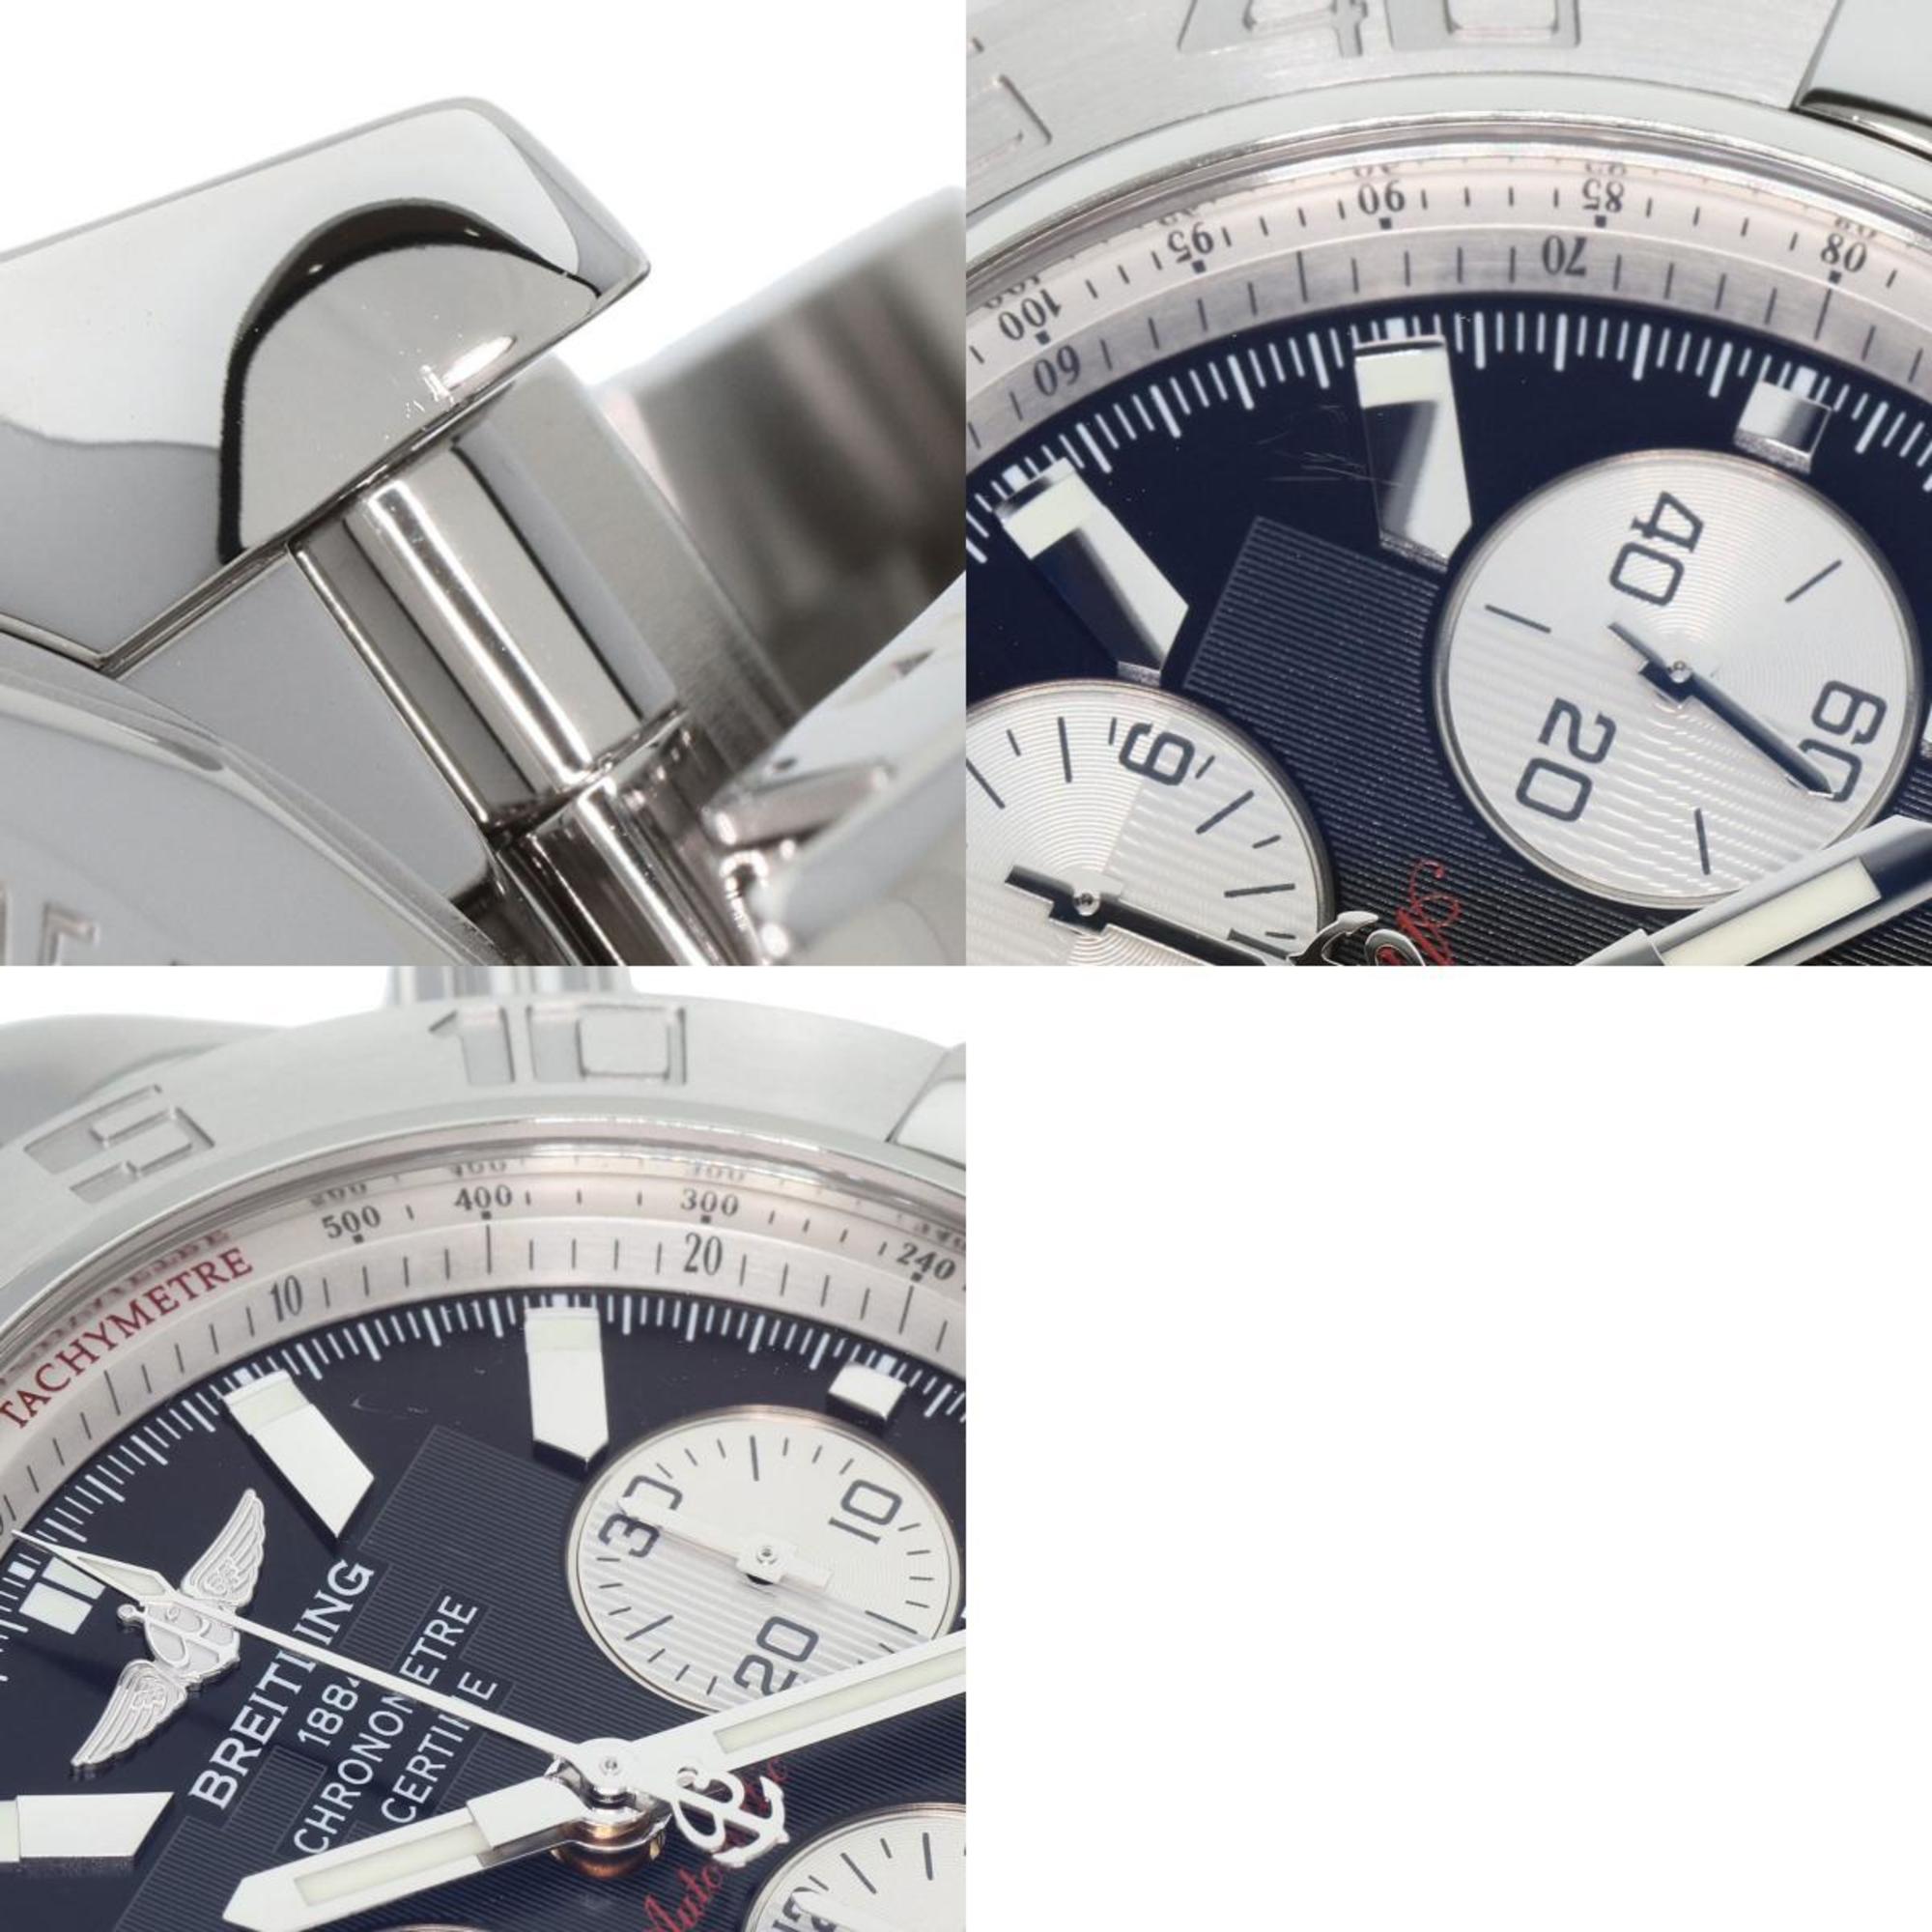 Breitling AB0110 Chronomat 44 Watch Stainless Steel/SS Men's BREITLING